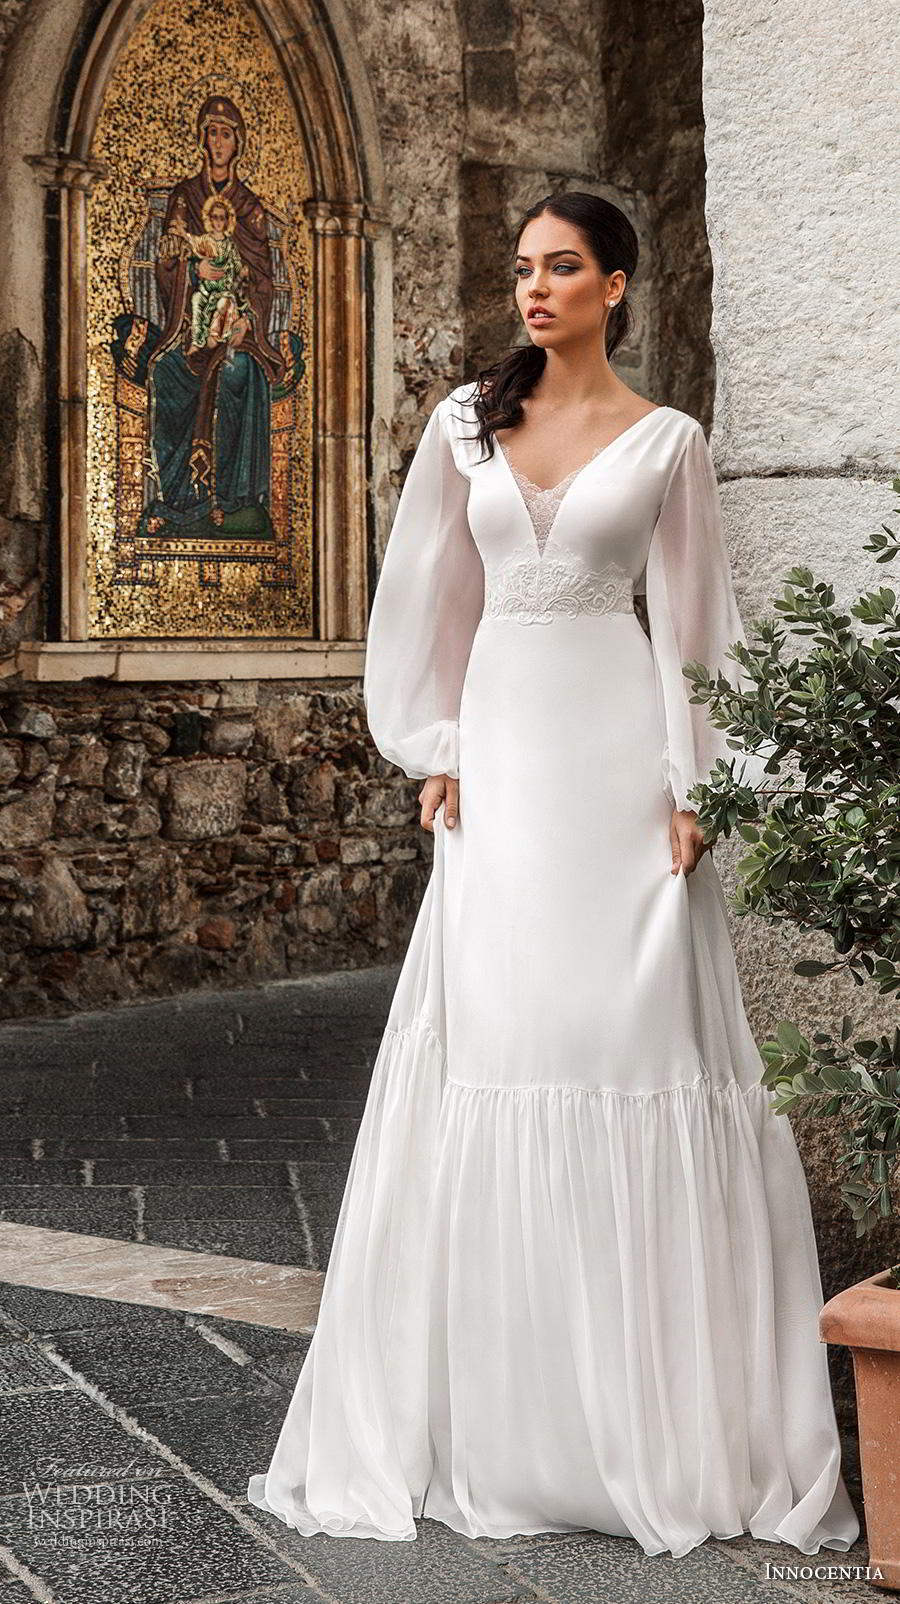 Innocentia 2019 toarmina bridal long bishop sleeves v neck simple elegant a  line wedding dress backless low back chapel train (6) mv